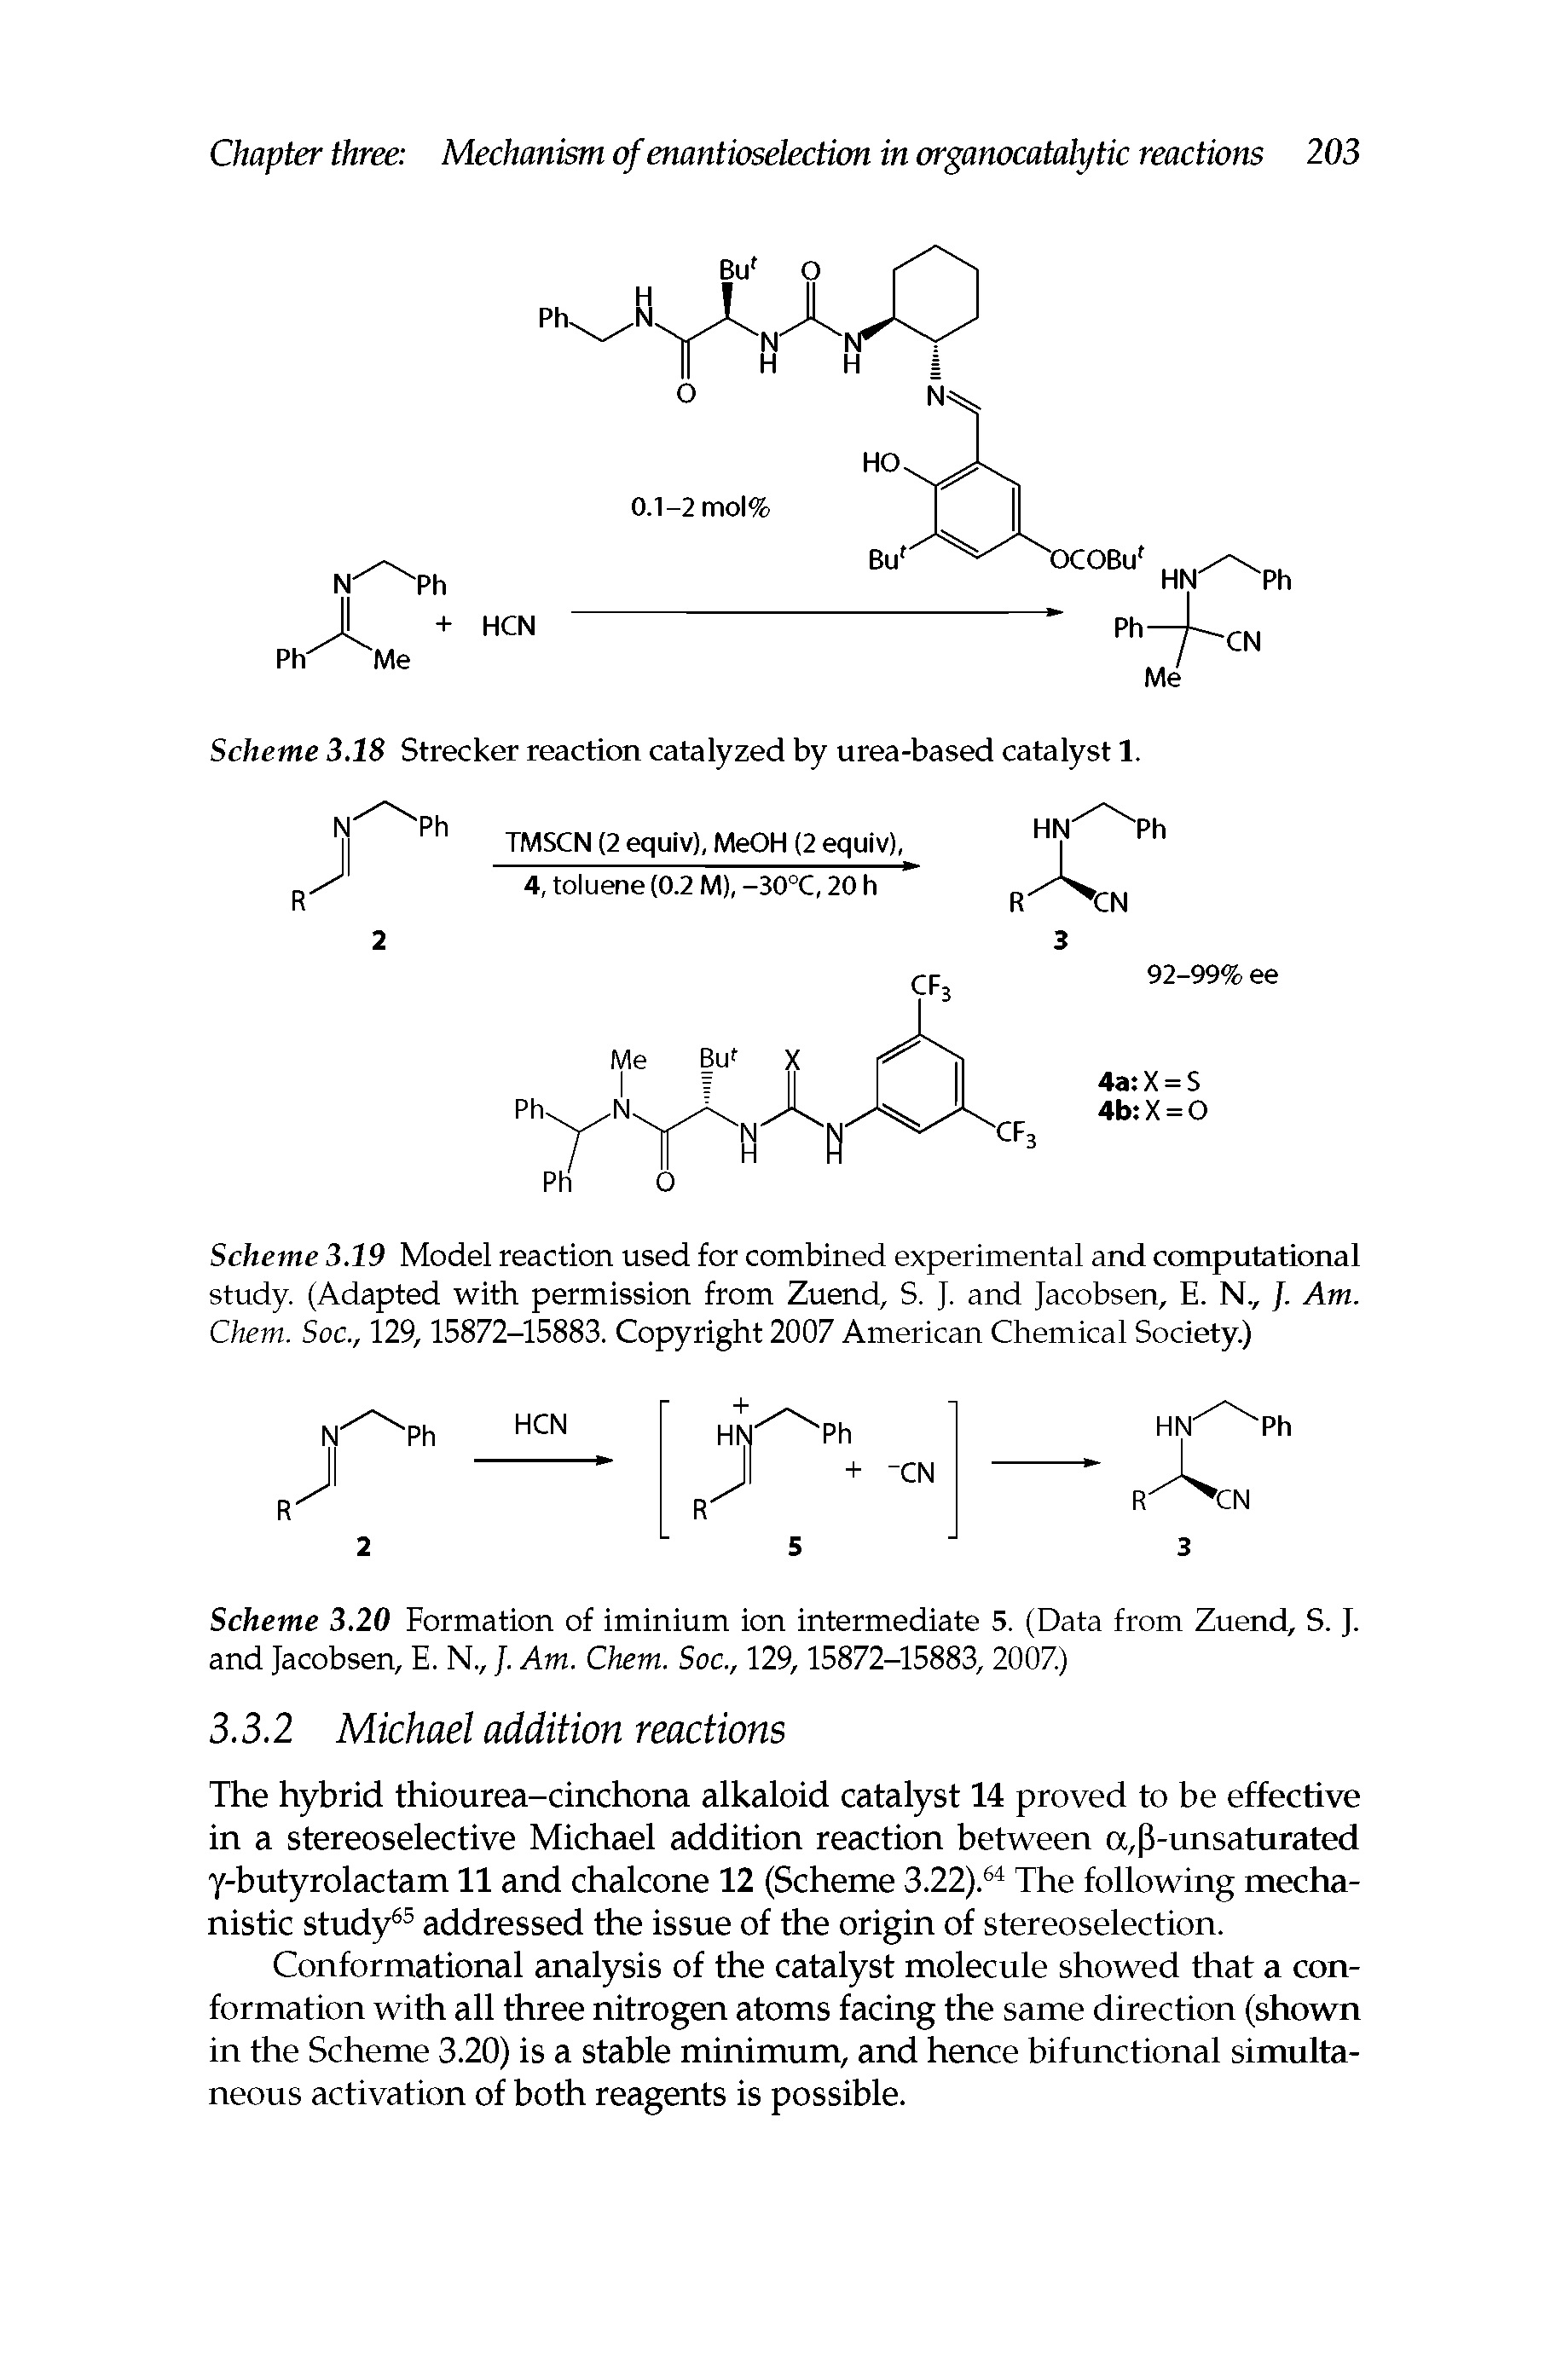 Scheme 3.18 Strecker reaction catalyzed by urea-based catalyst 1.